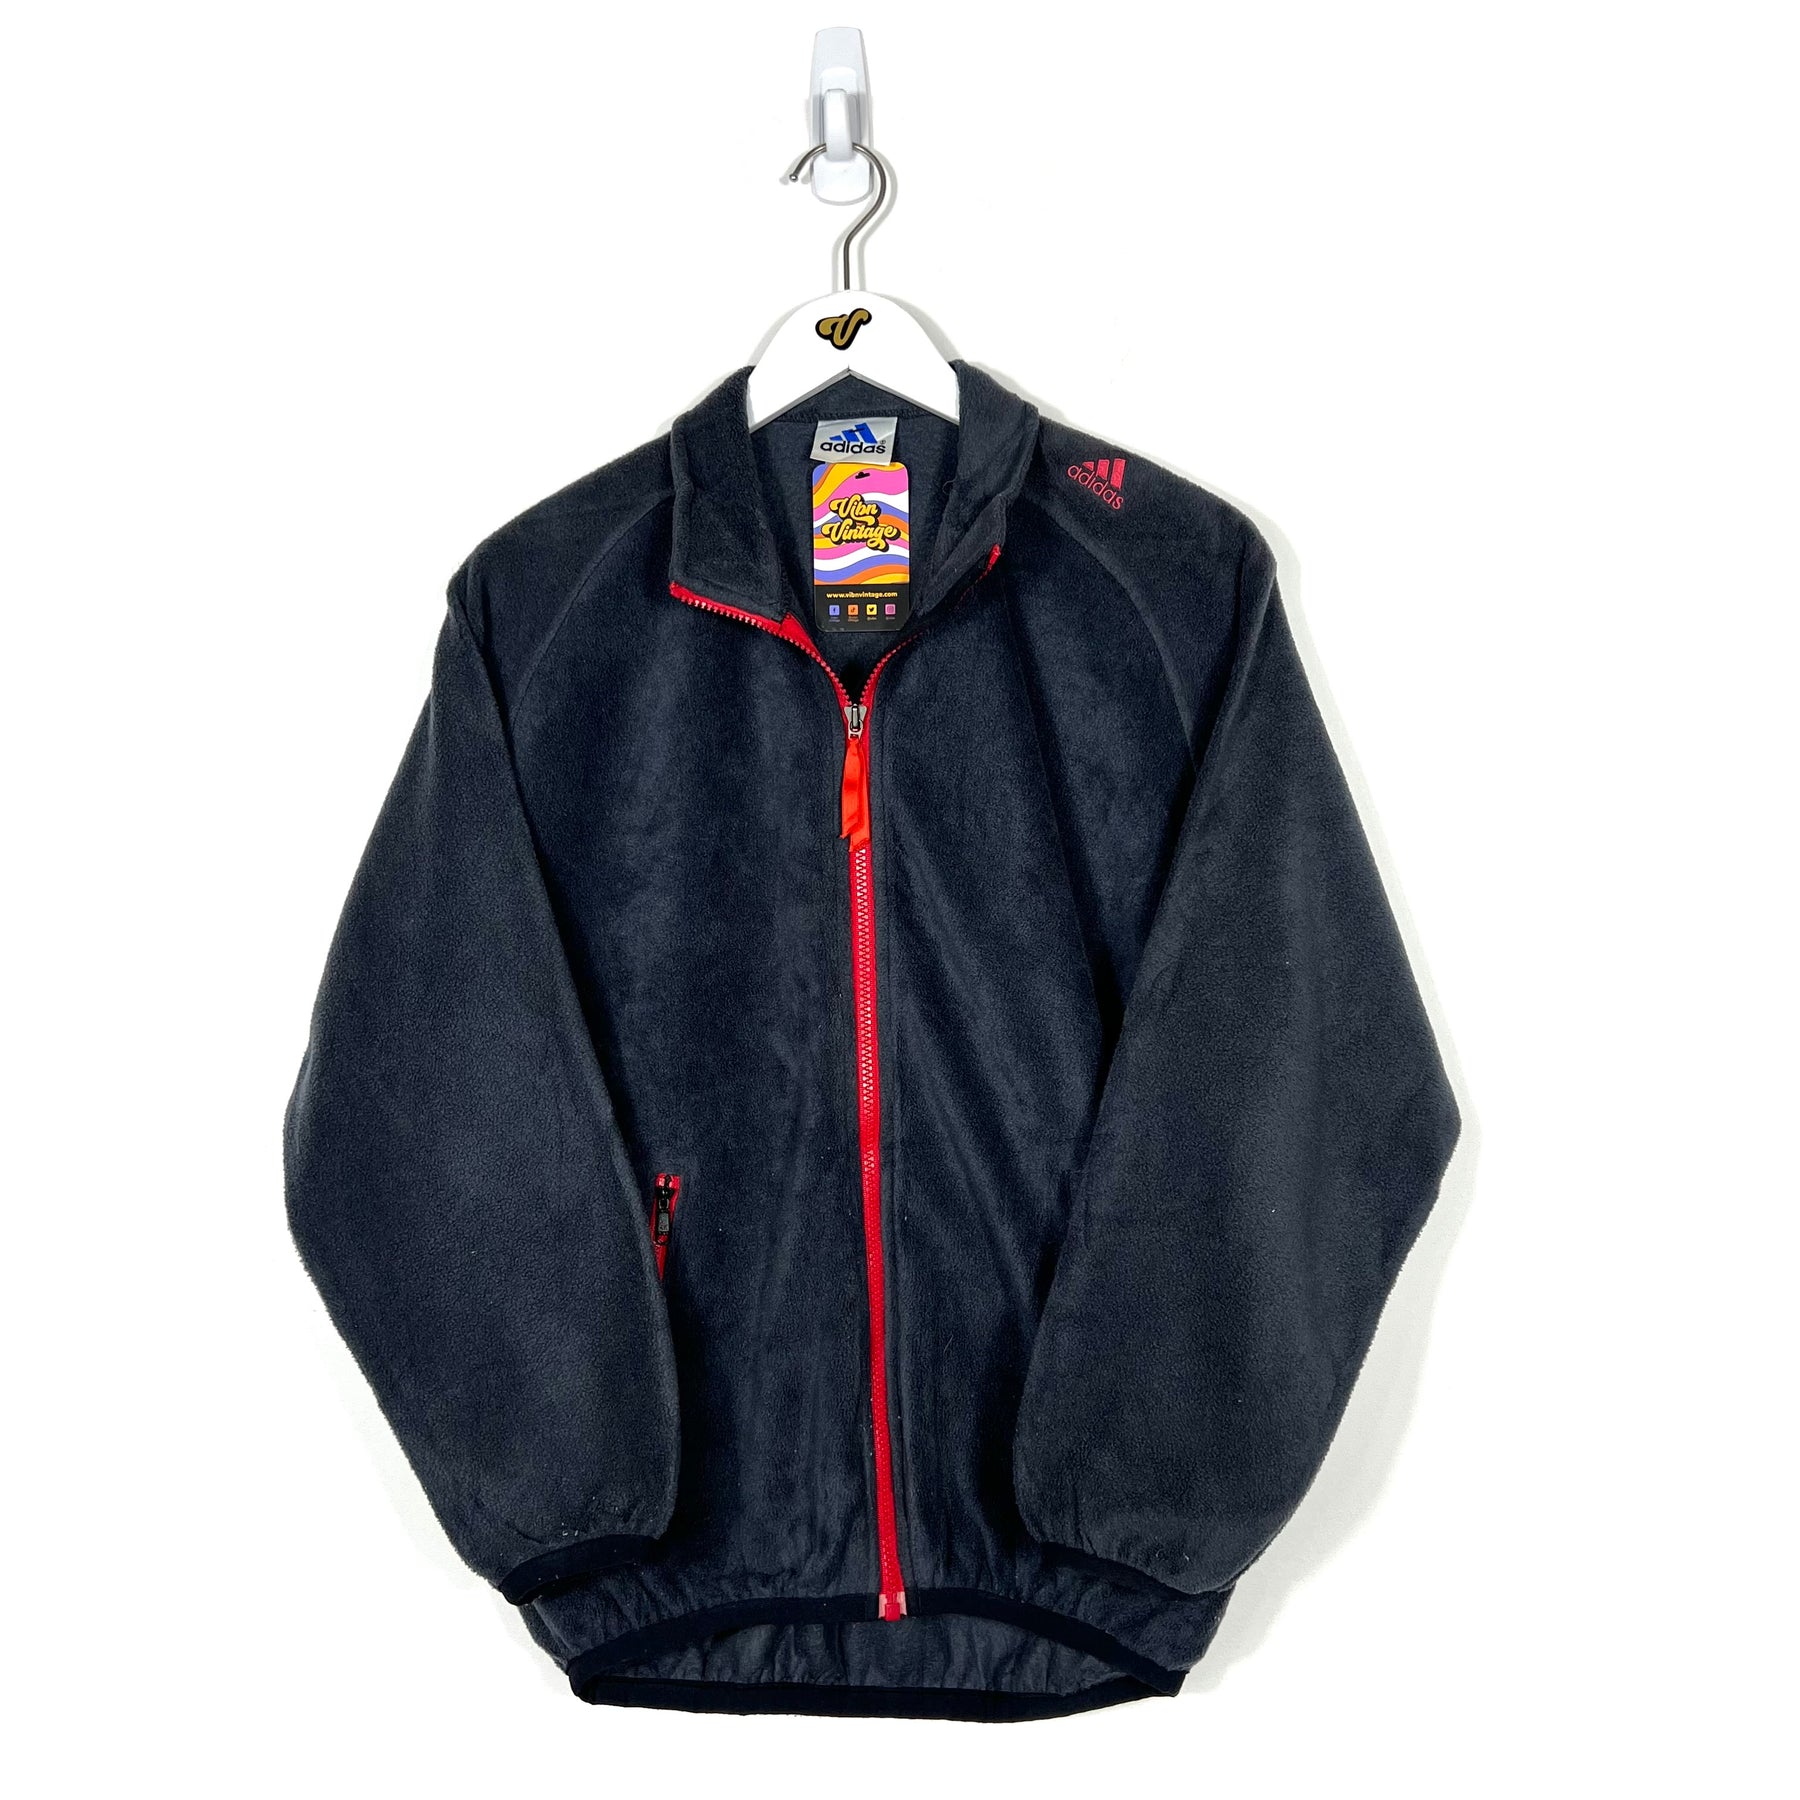 Vintage Adidas Fleece Jacket - Men's Small